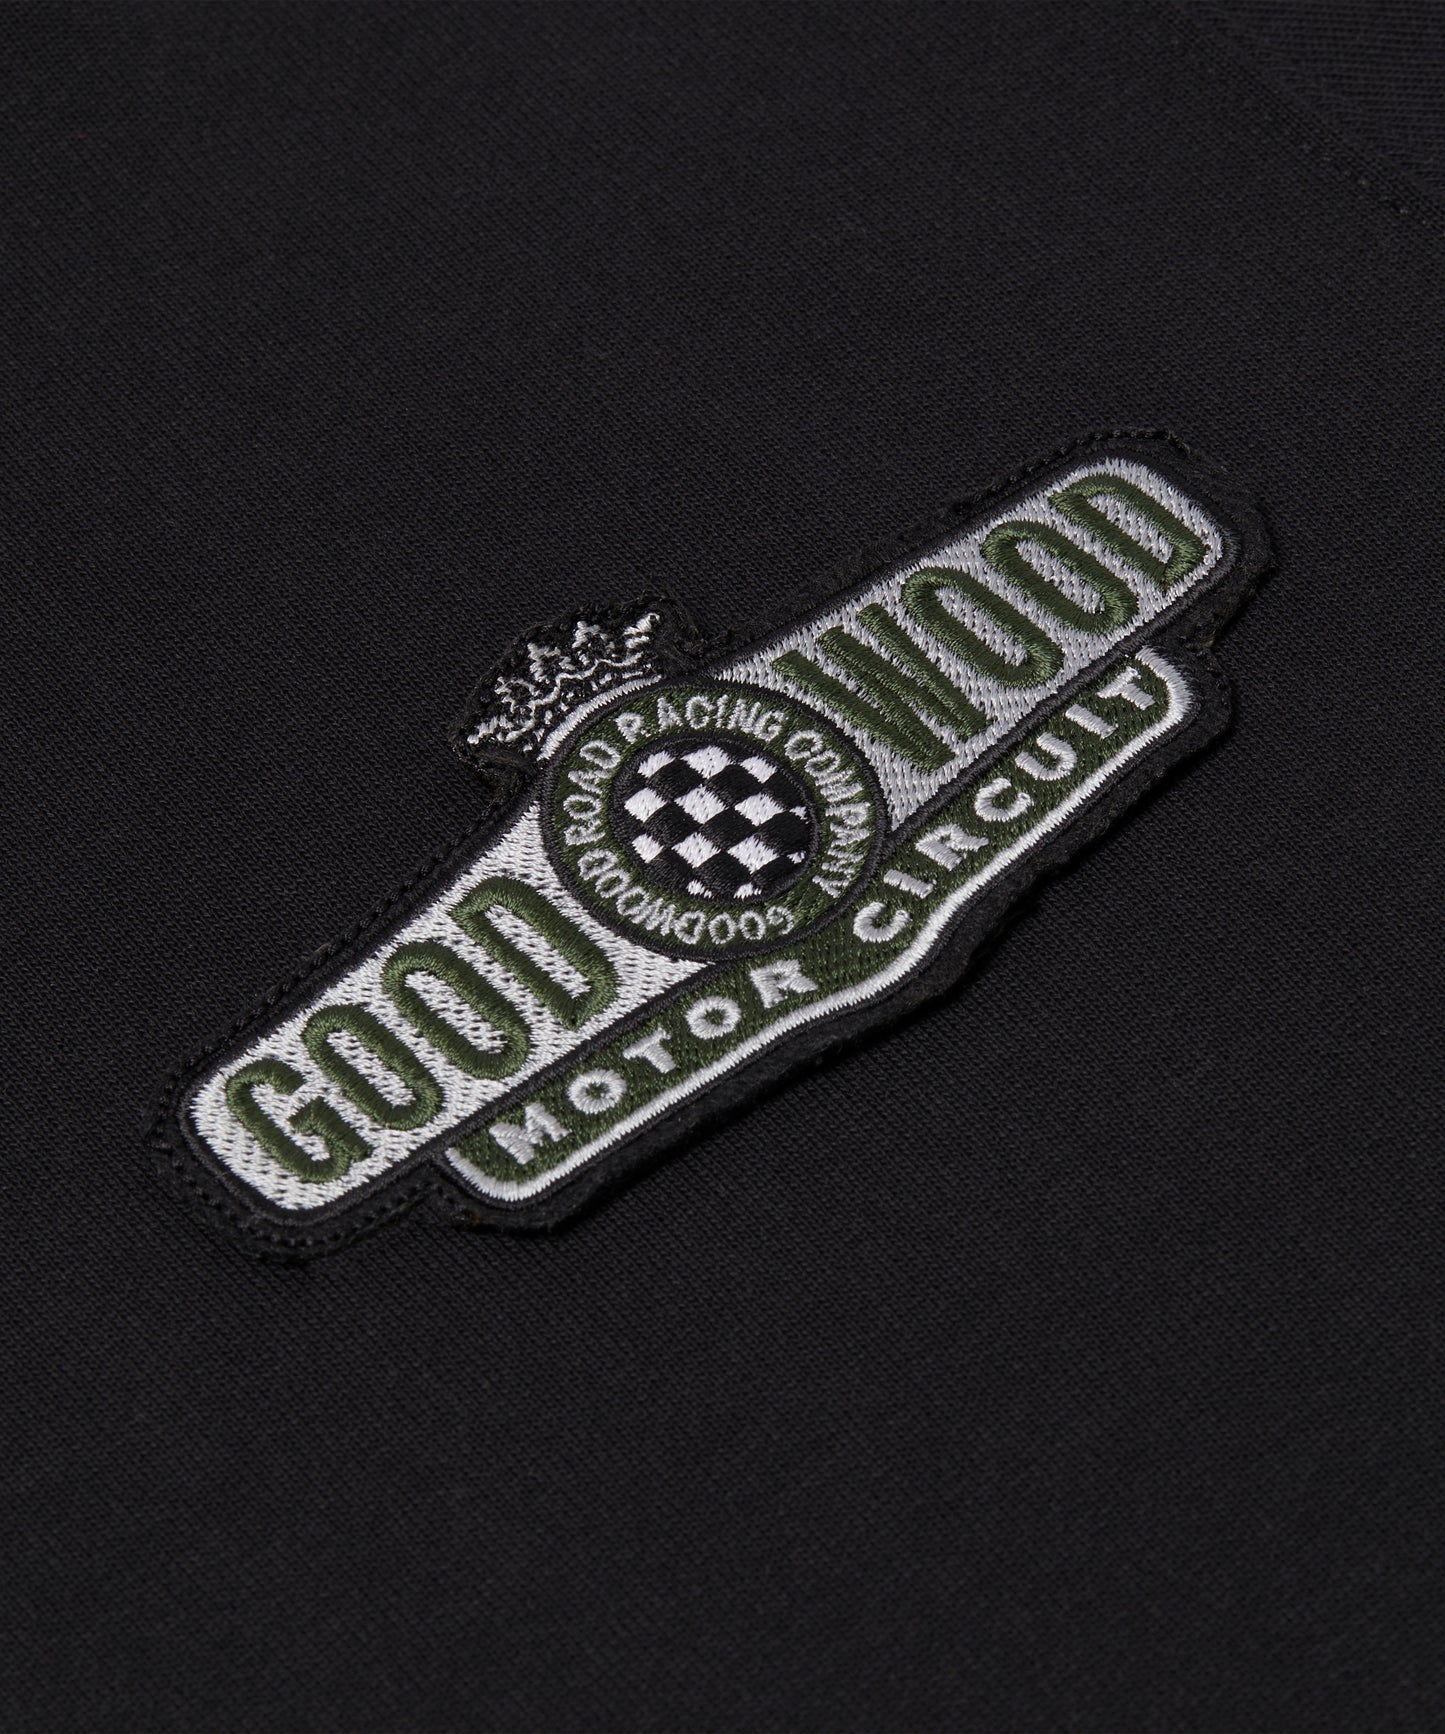 Goodwood Motor Circuit Zipped Hoody